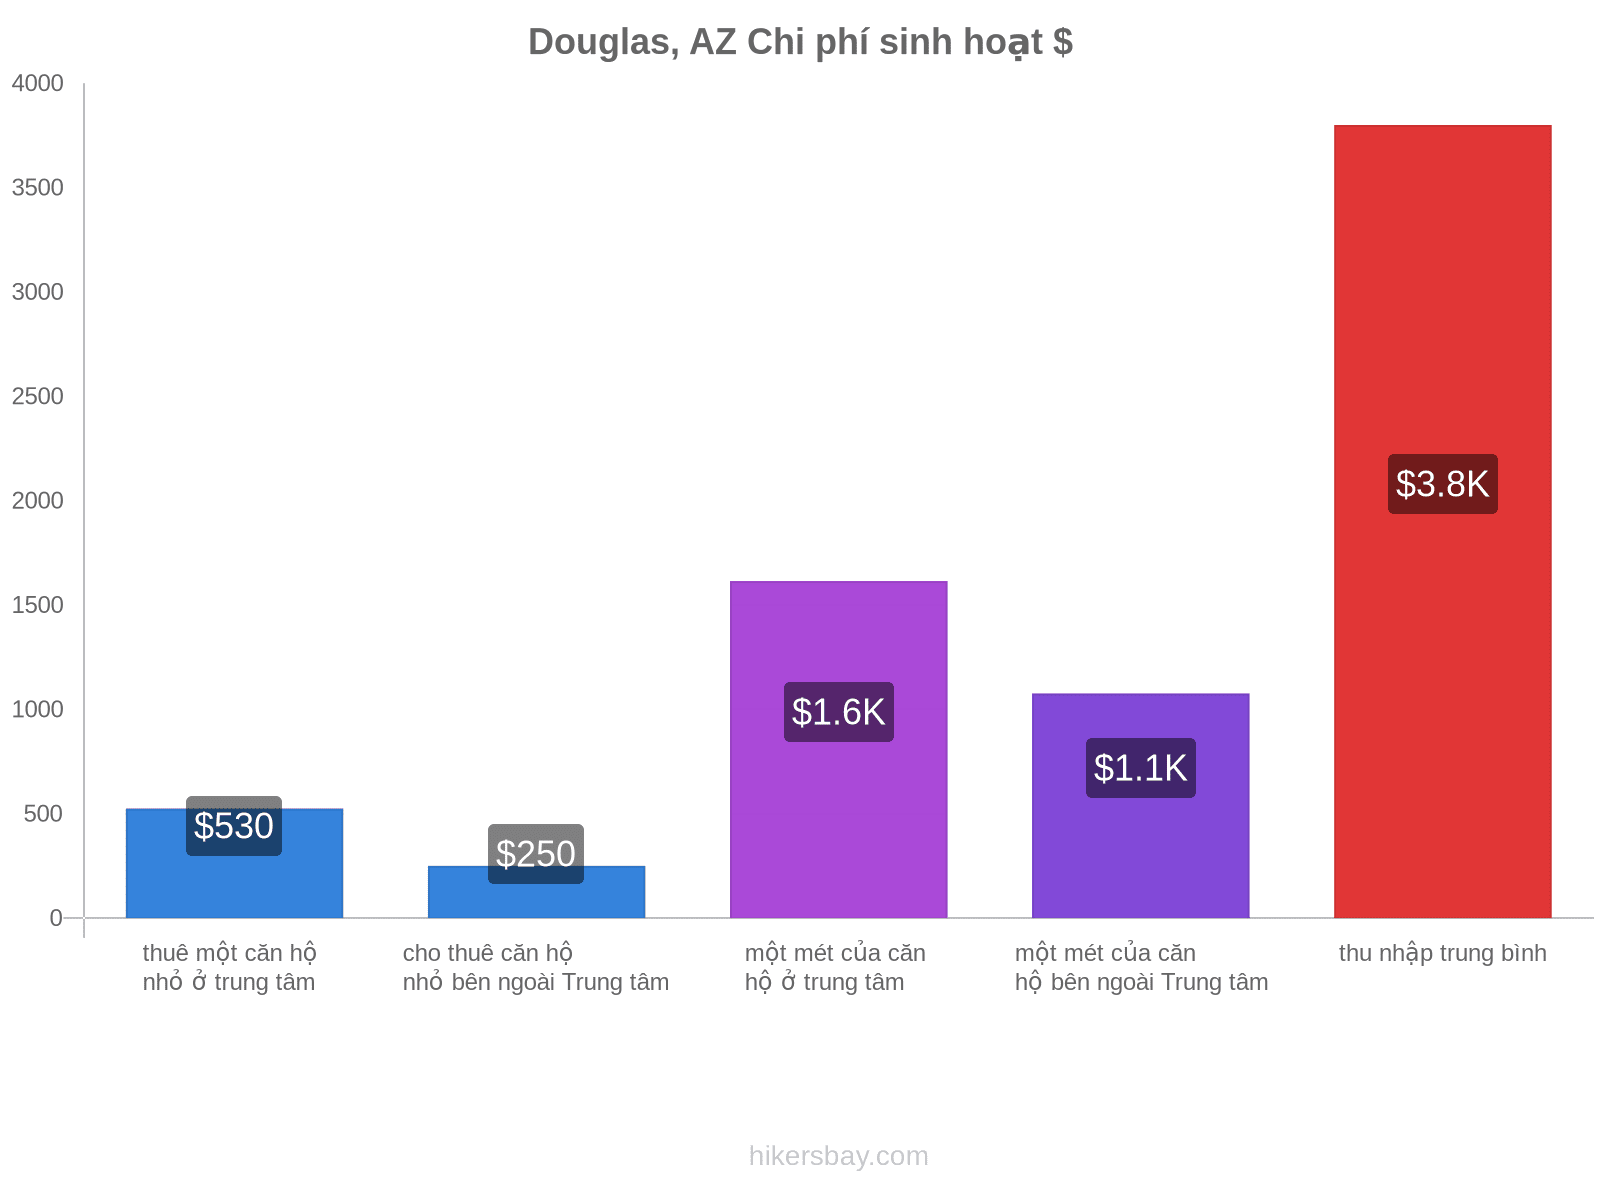 Douglas, AZ chi phí sinh hoạt hikersbay.com